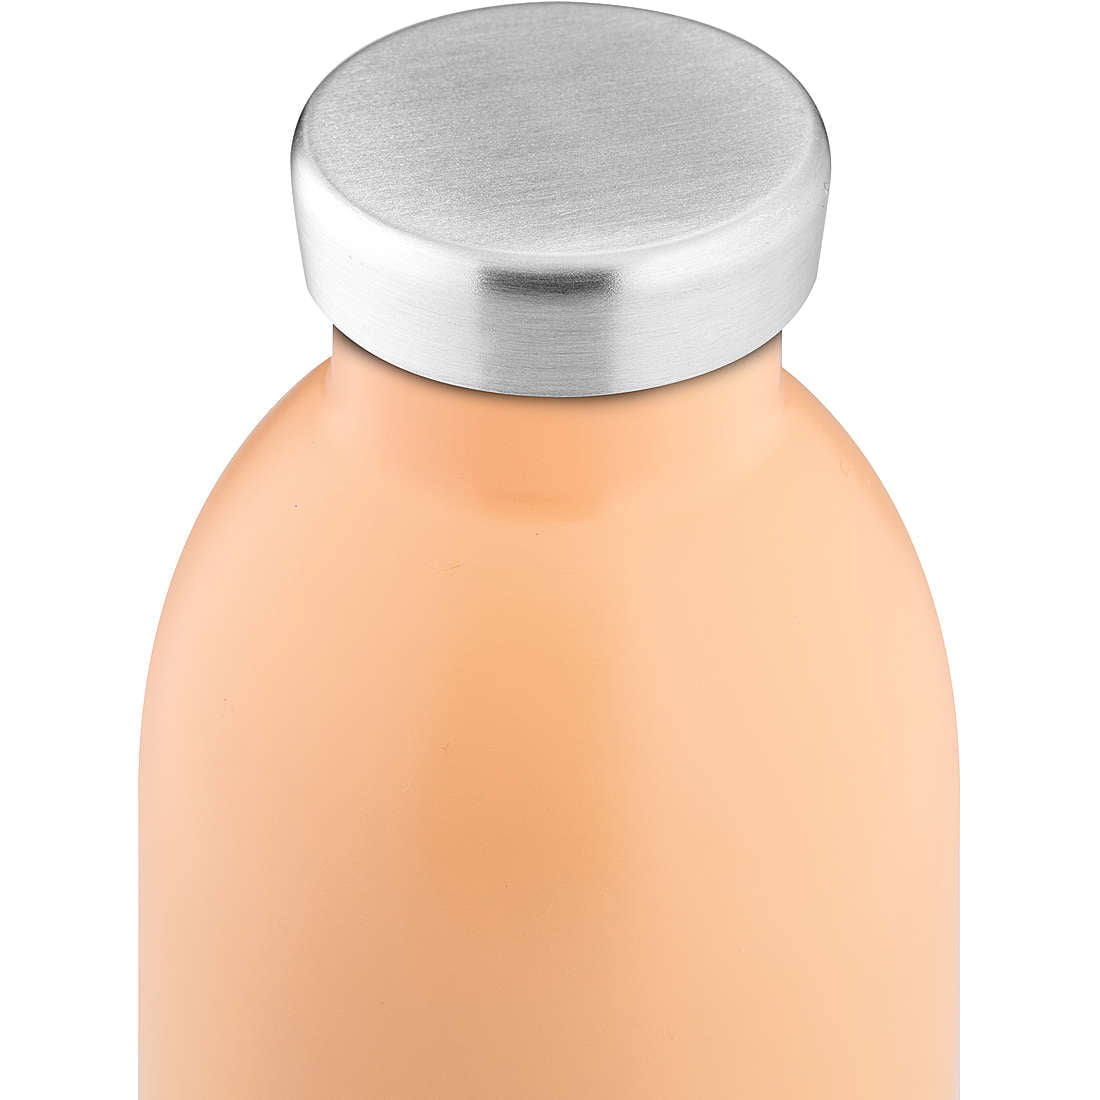 24Bottles Clima Bottle 500ml Peach Orange